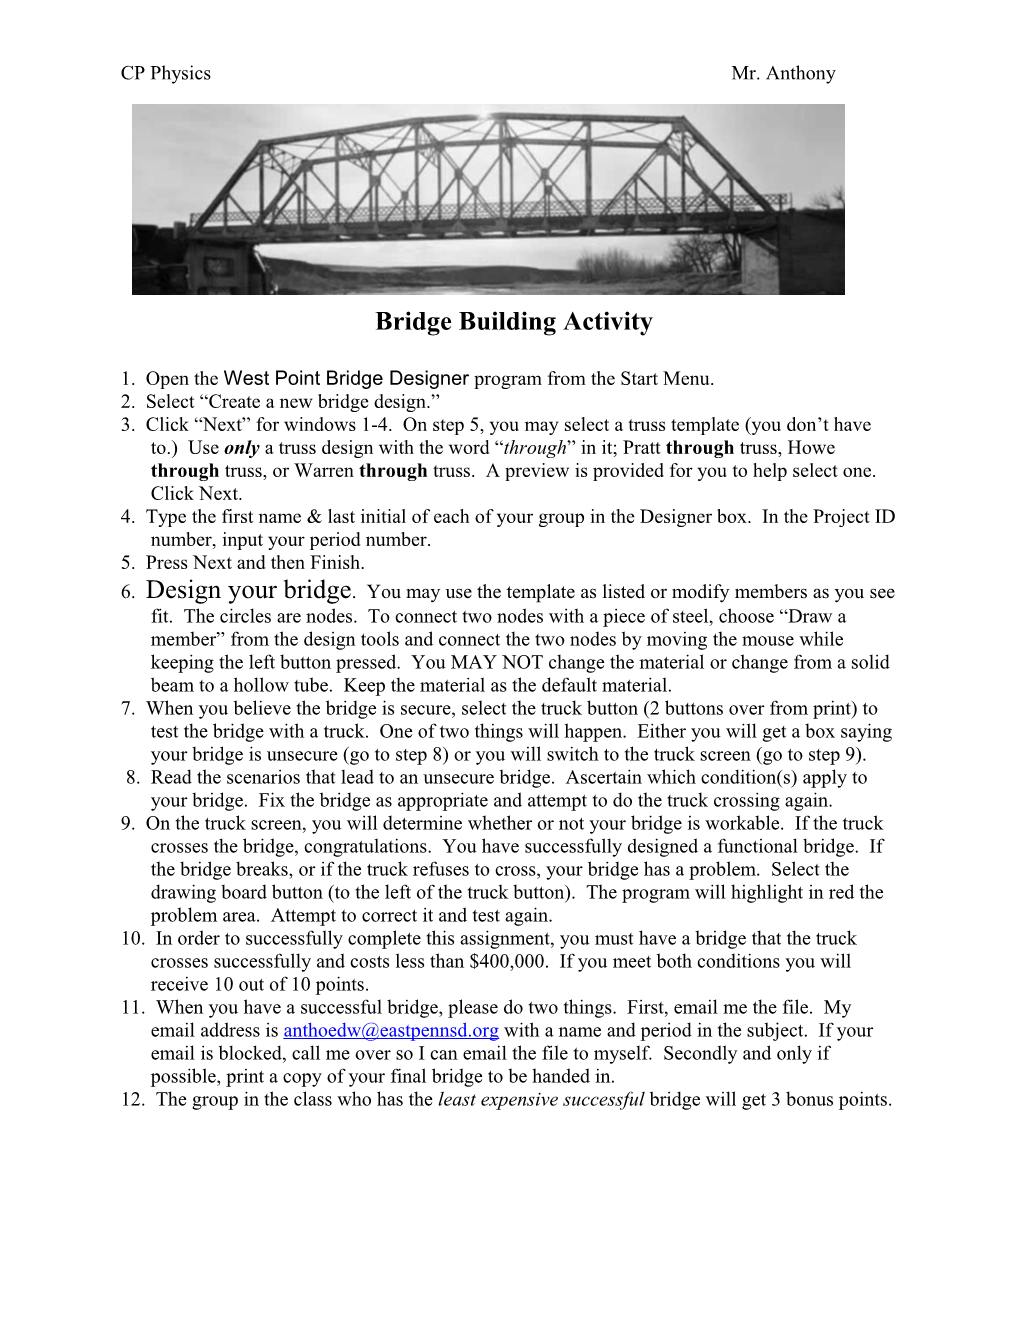 Bridge Building Activity